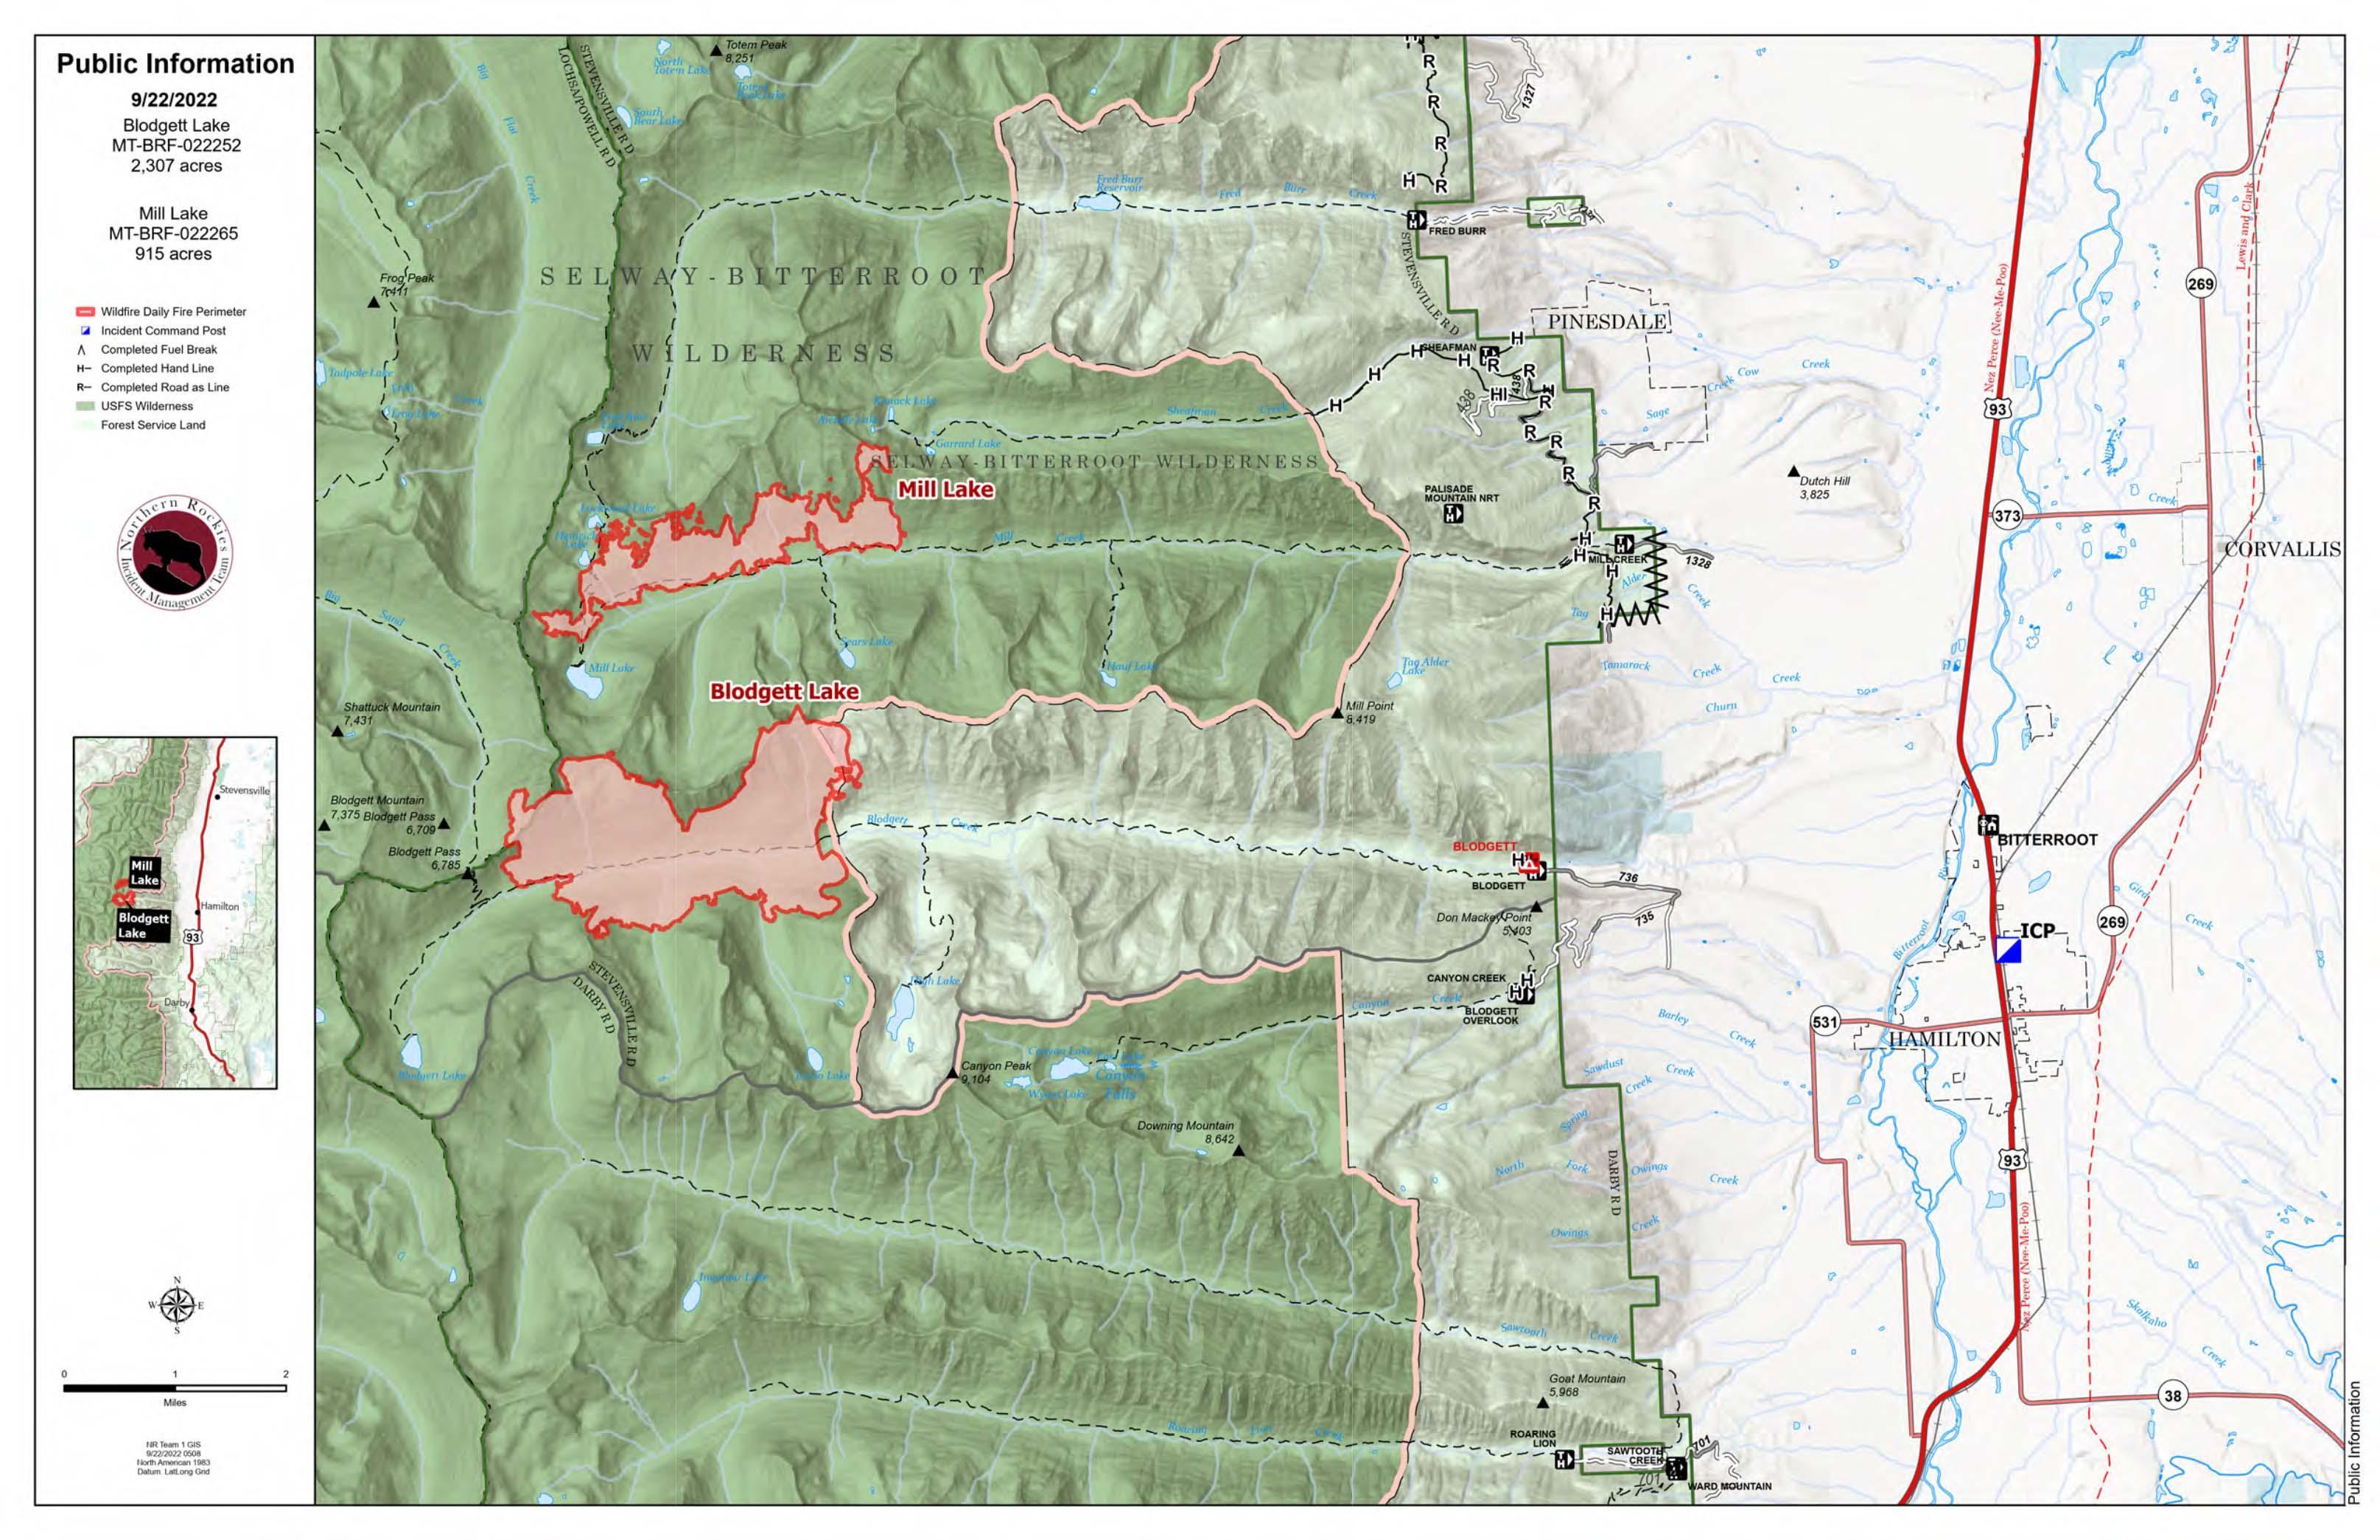 Blodgett Lake & Mill Lake Fire Map for 9-22-2022